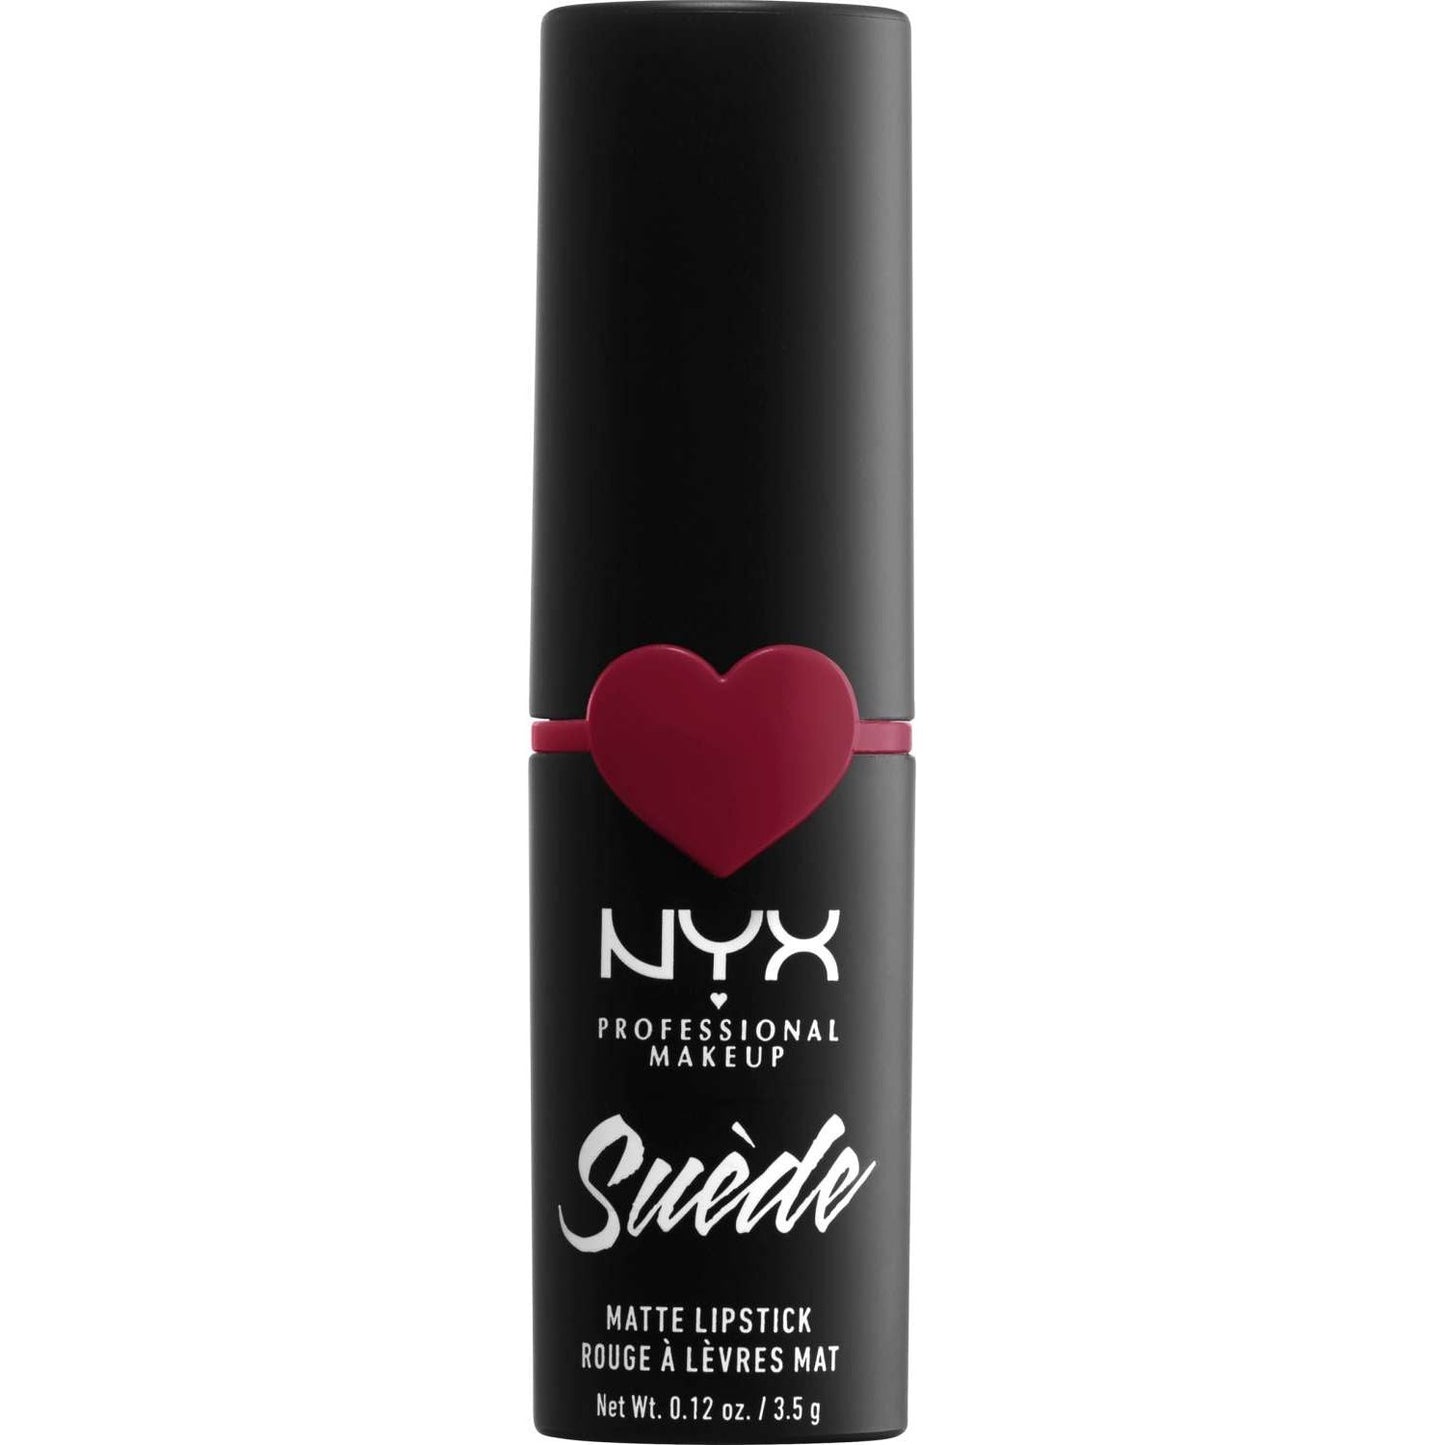 NYX Suede Matte Lipstick 09 - Spicy .12 Oz